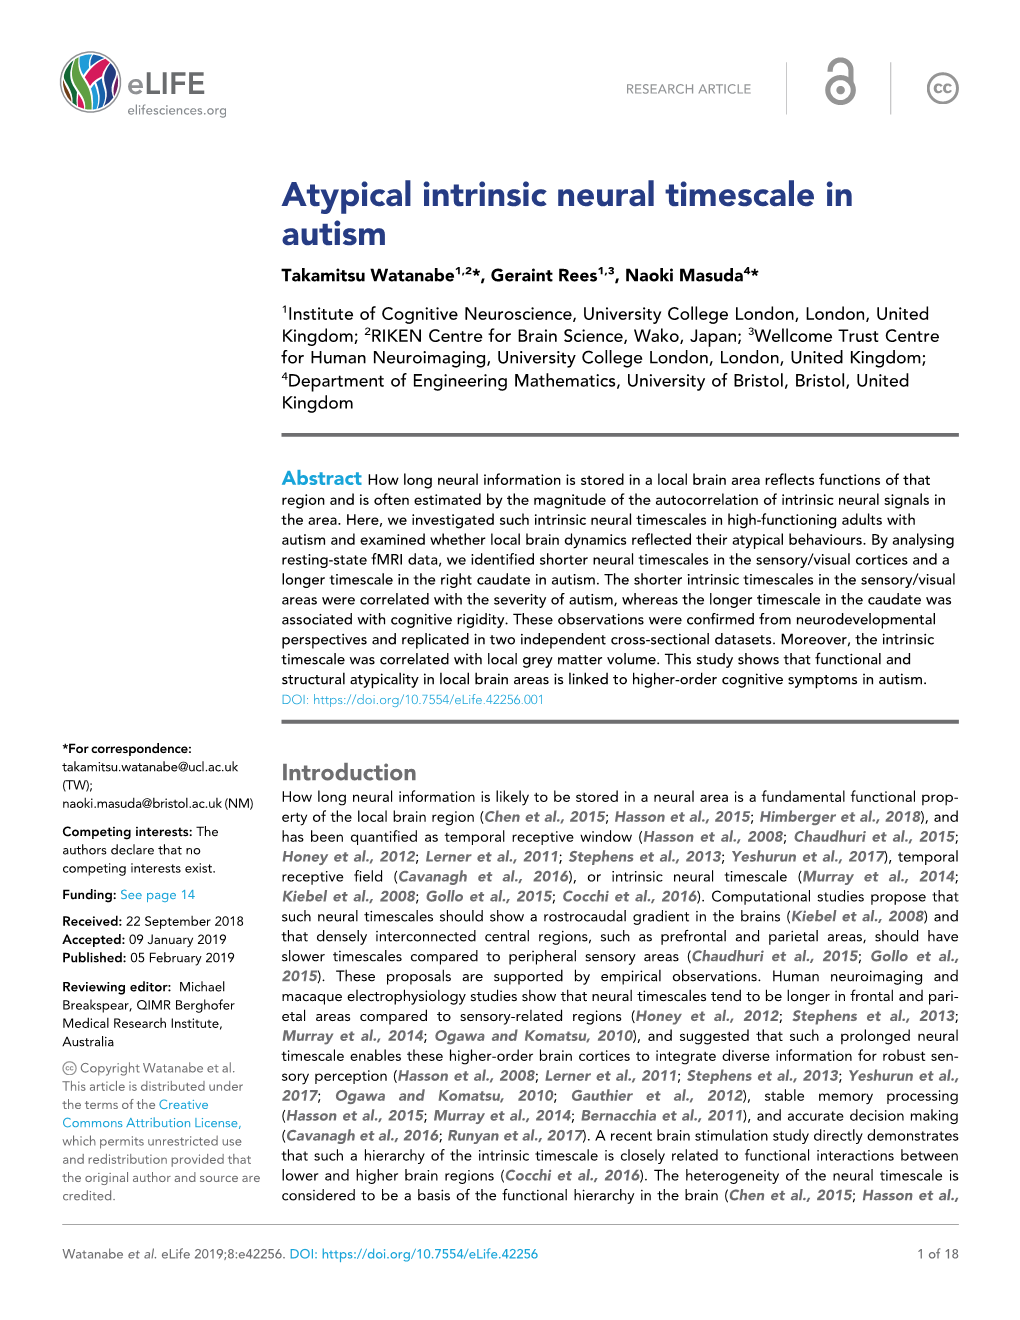 Atypical Intrinsic Neural Timescale in Autism Takamitsu Watanabe1,2*, Geraint Rees1,3, Naoki Masuda4*